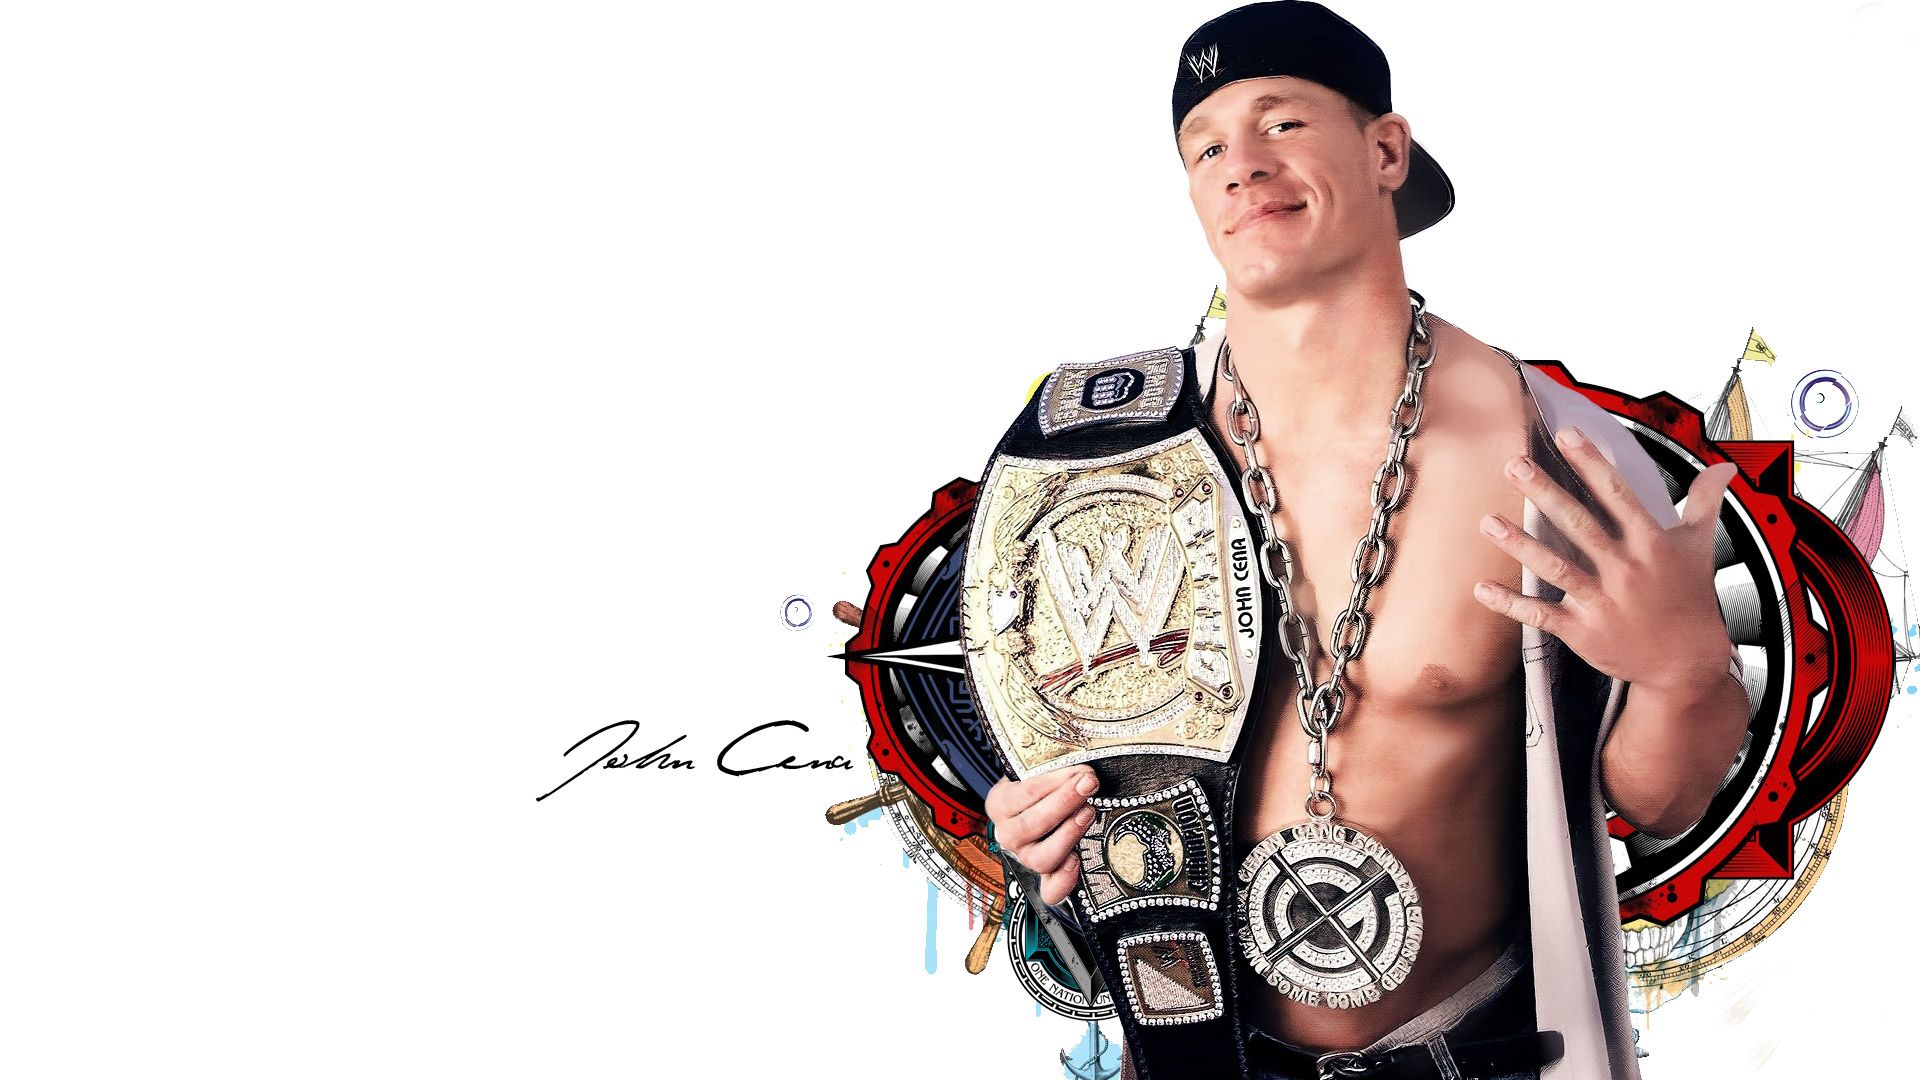 John Cena Wallpaper For Desktop HD